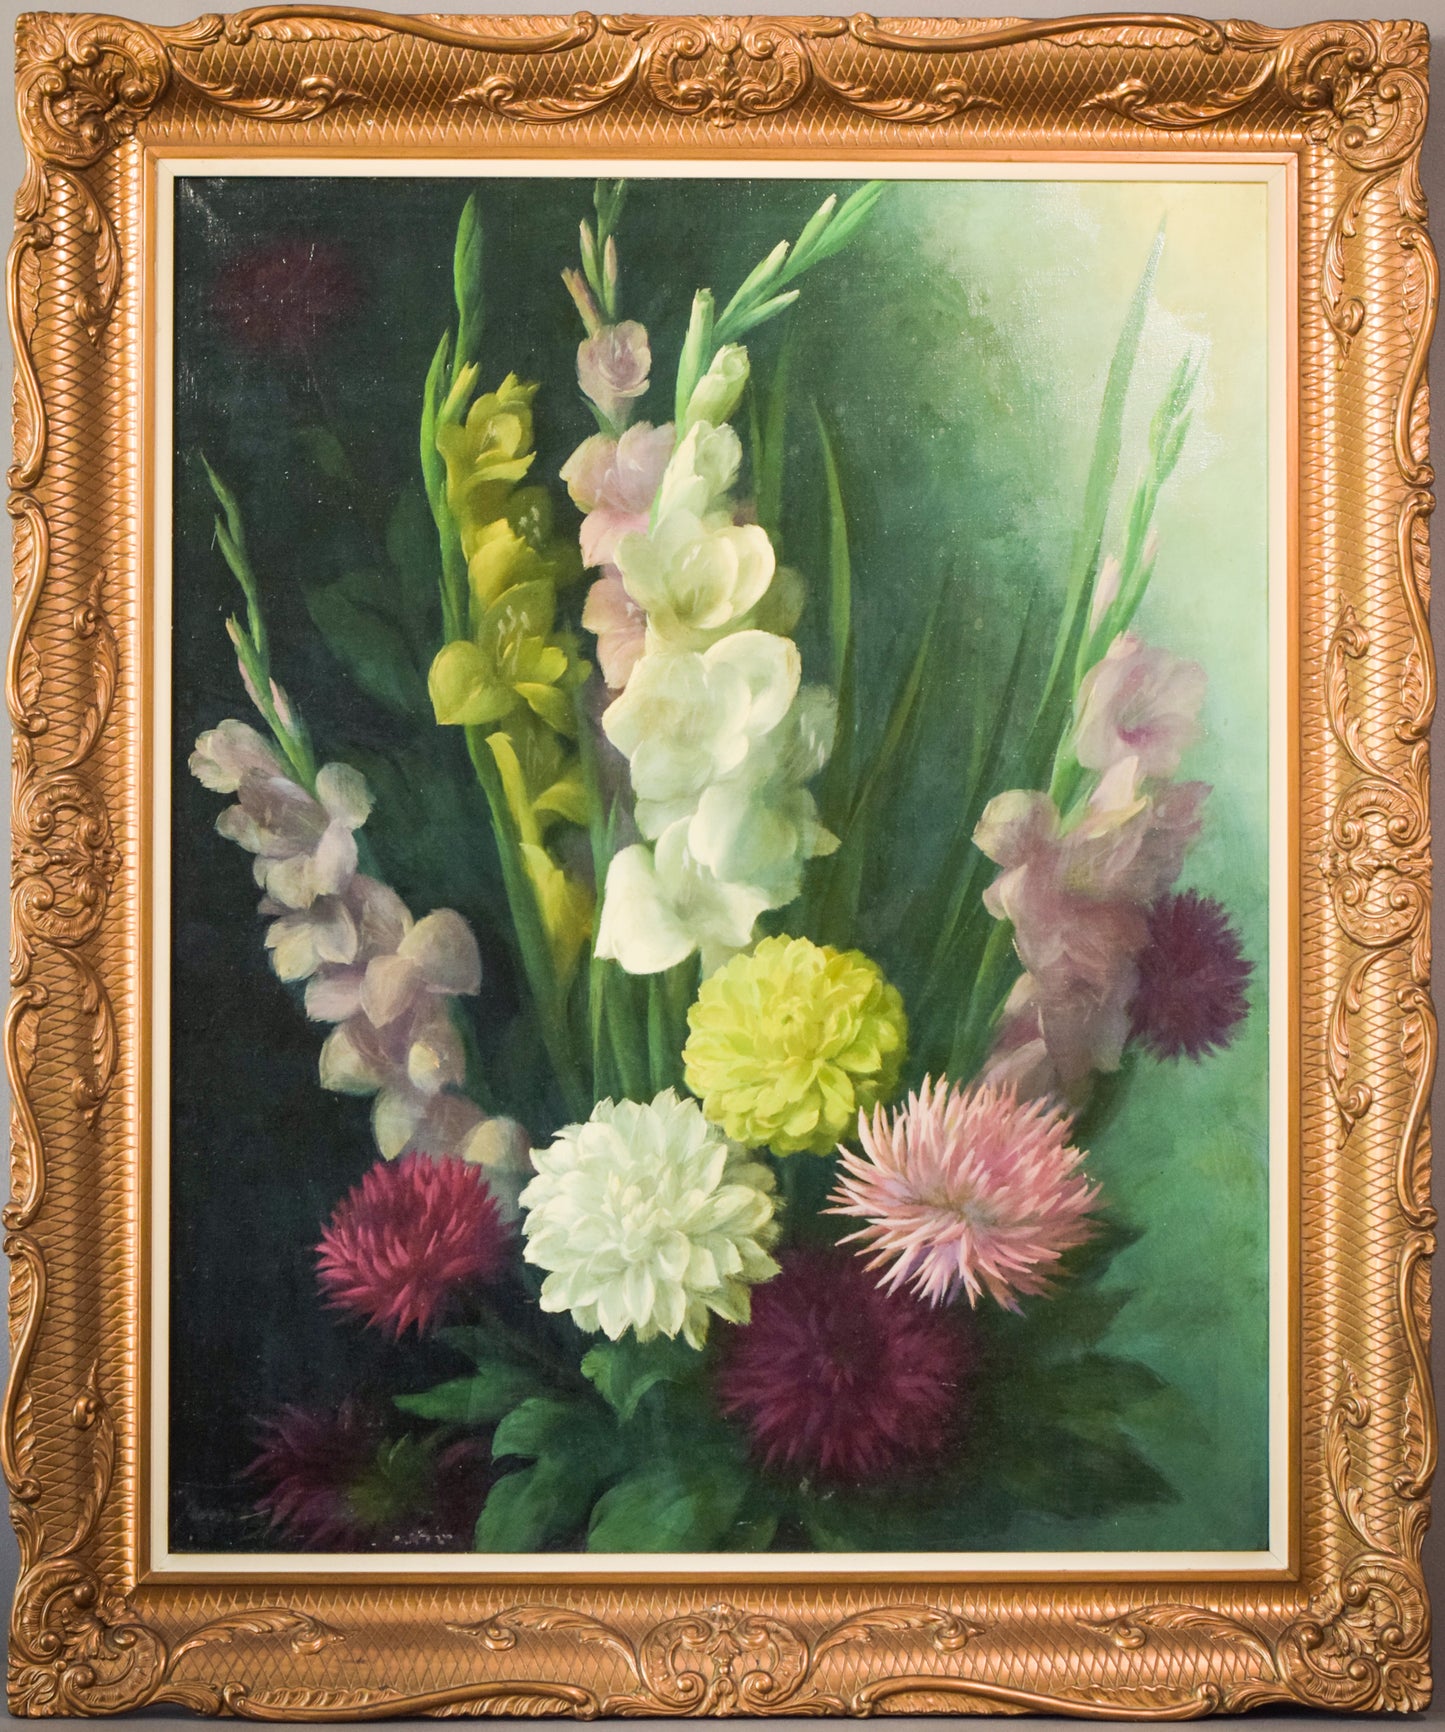 Radiant Flowers - Oil on Canvas